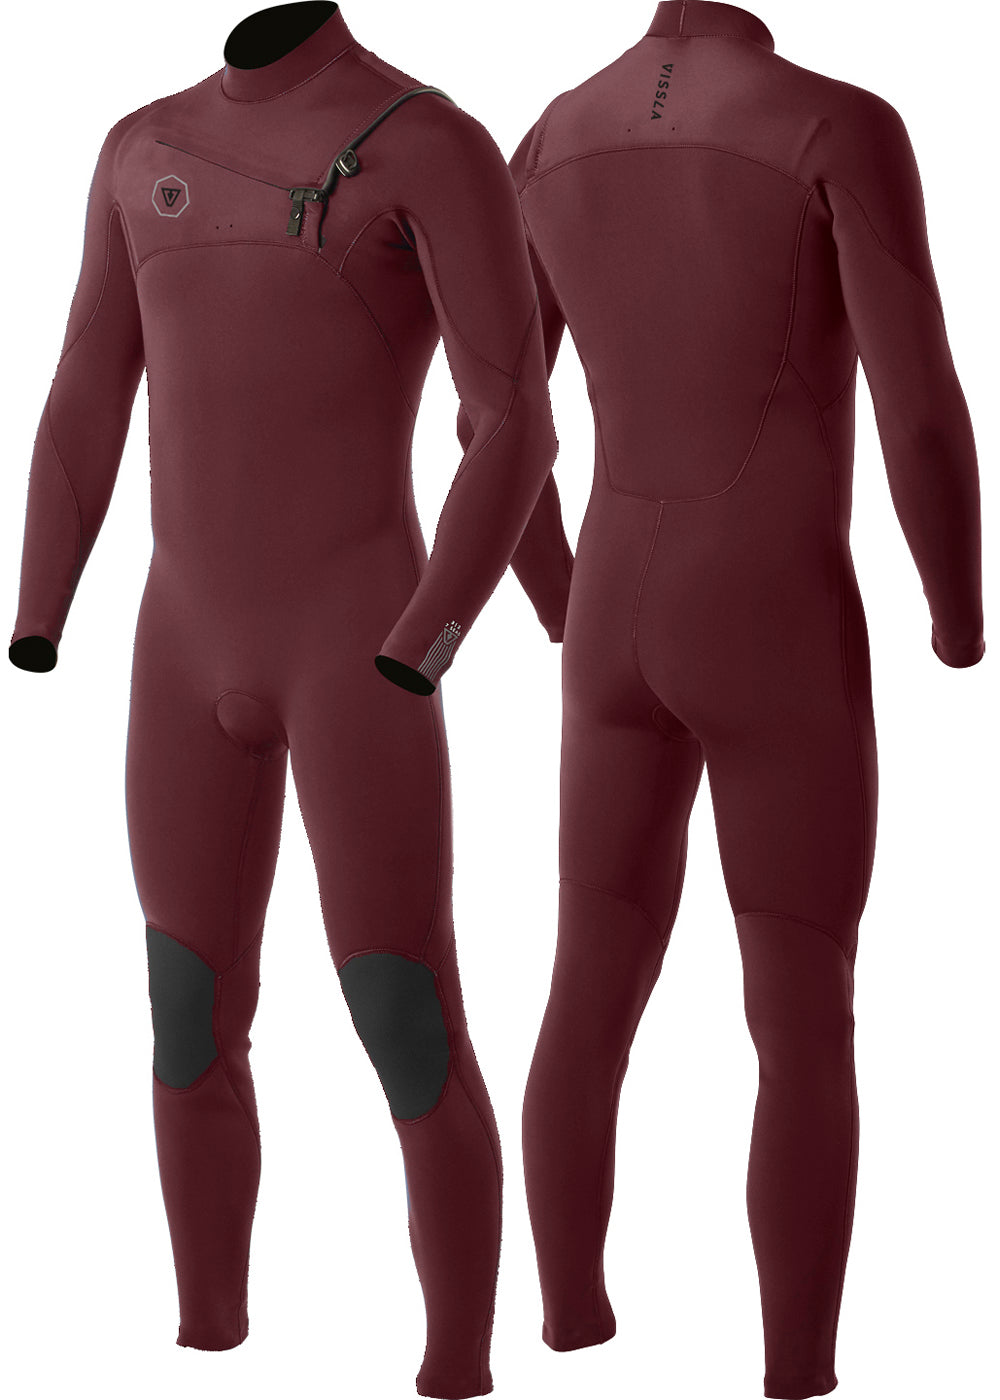 Vissla Men's Wine 7 Seas 3-2 chest zip full suit. Front and back view.